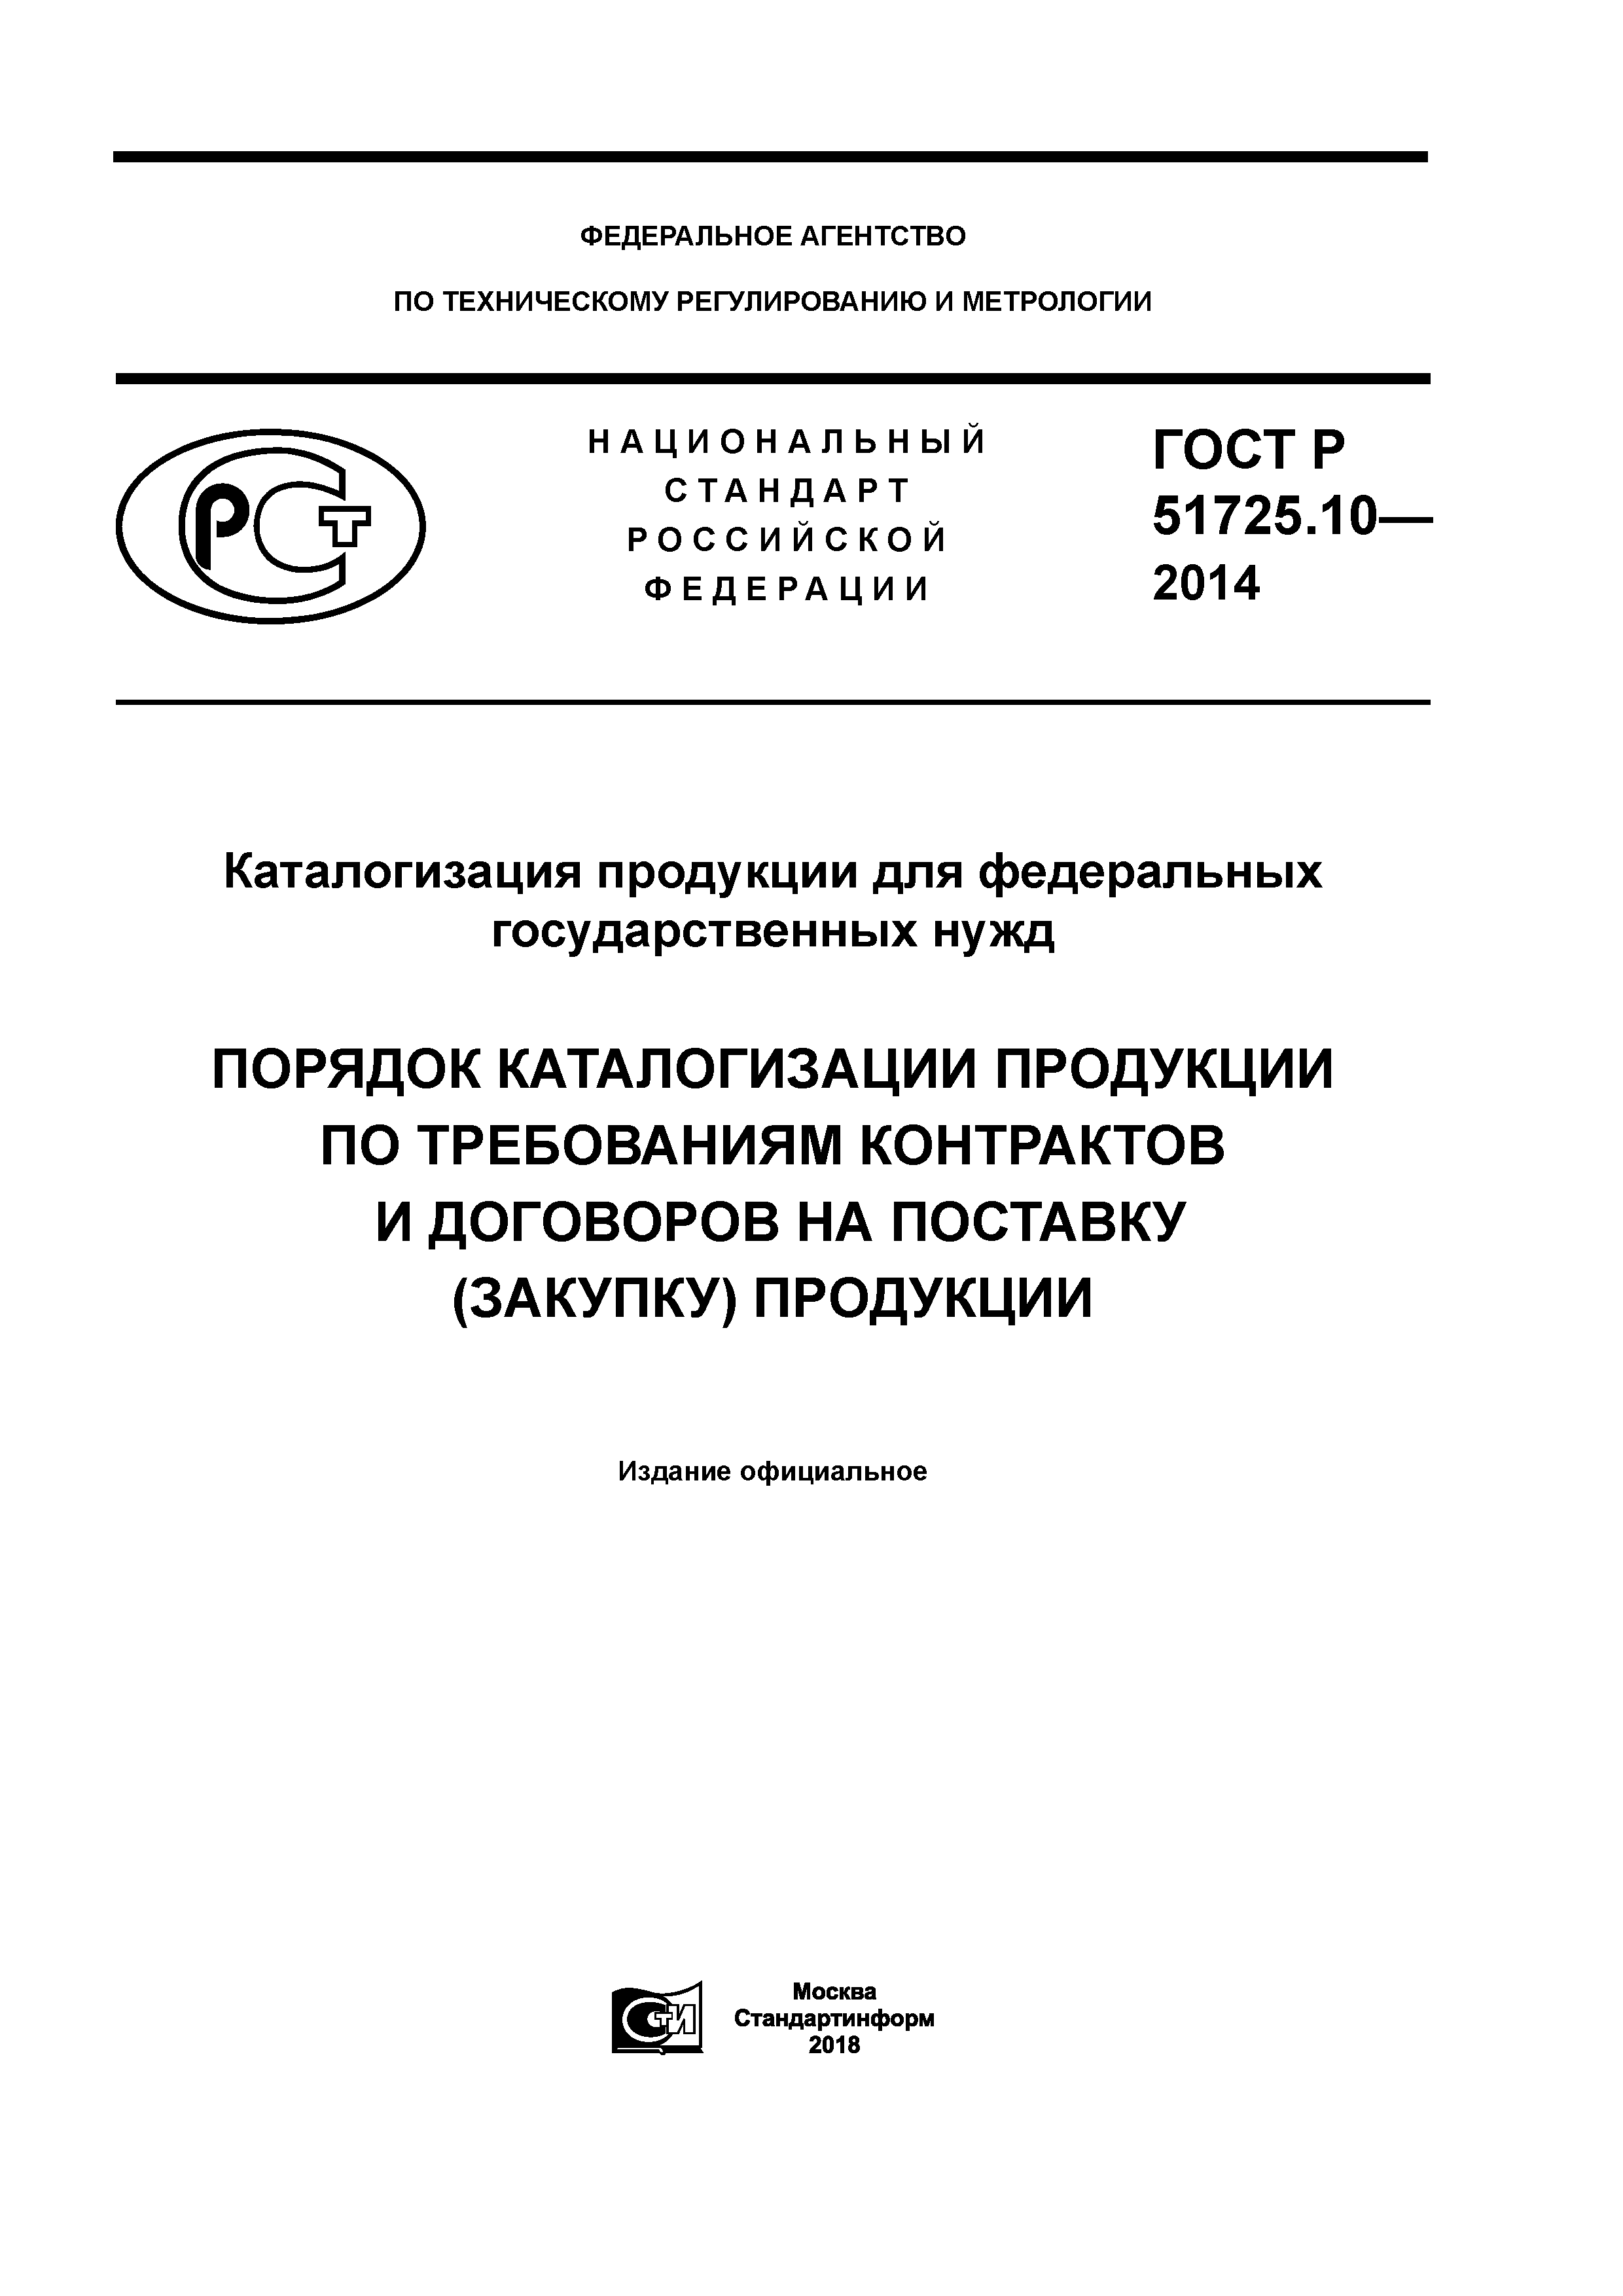 ГОСТ Р 51725.10-2014